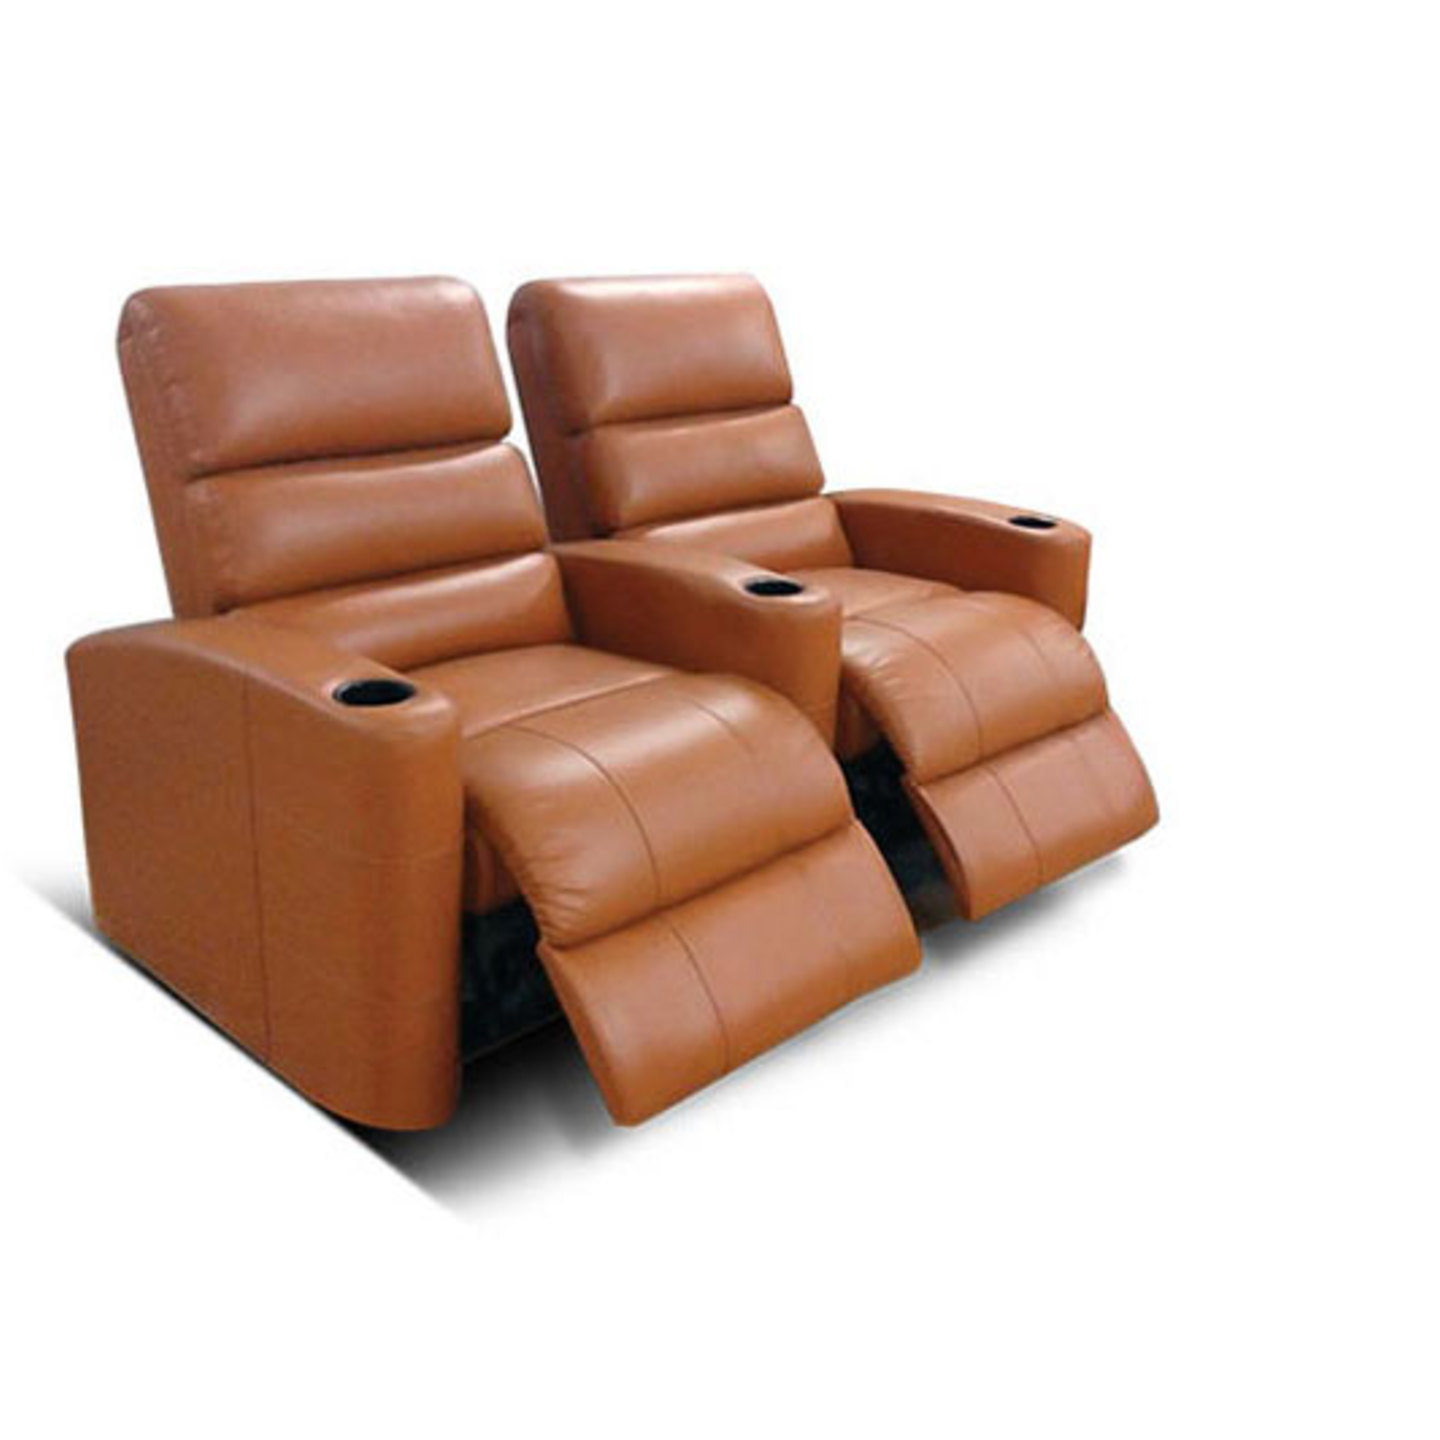 LN Recliner Chair Elegante Manual System In Brown Colour